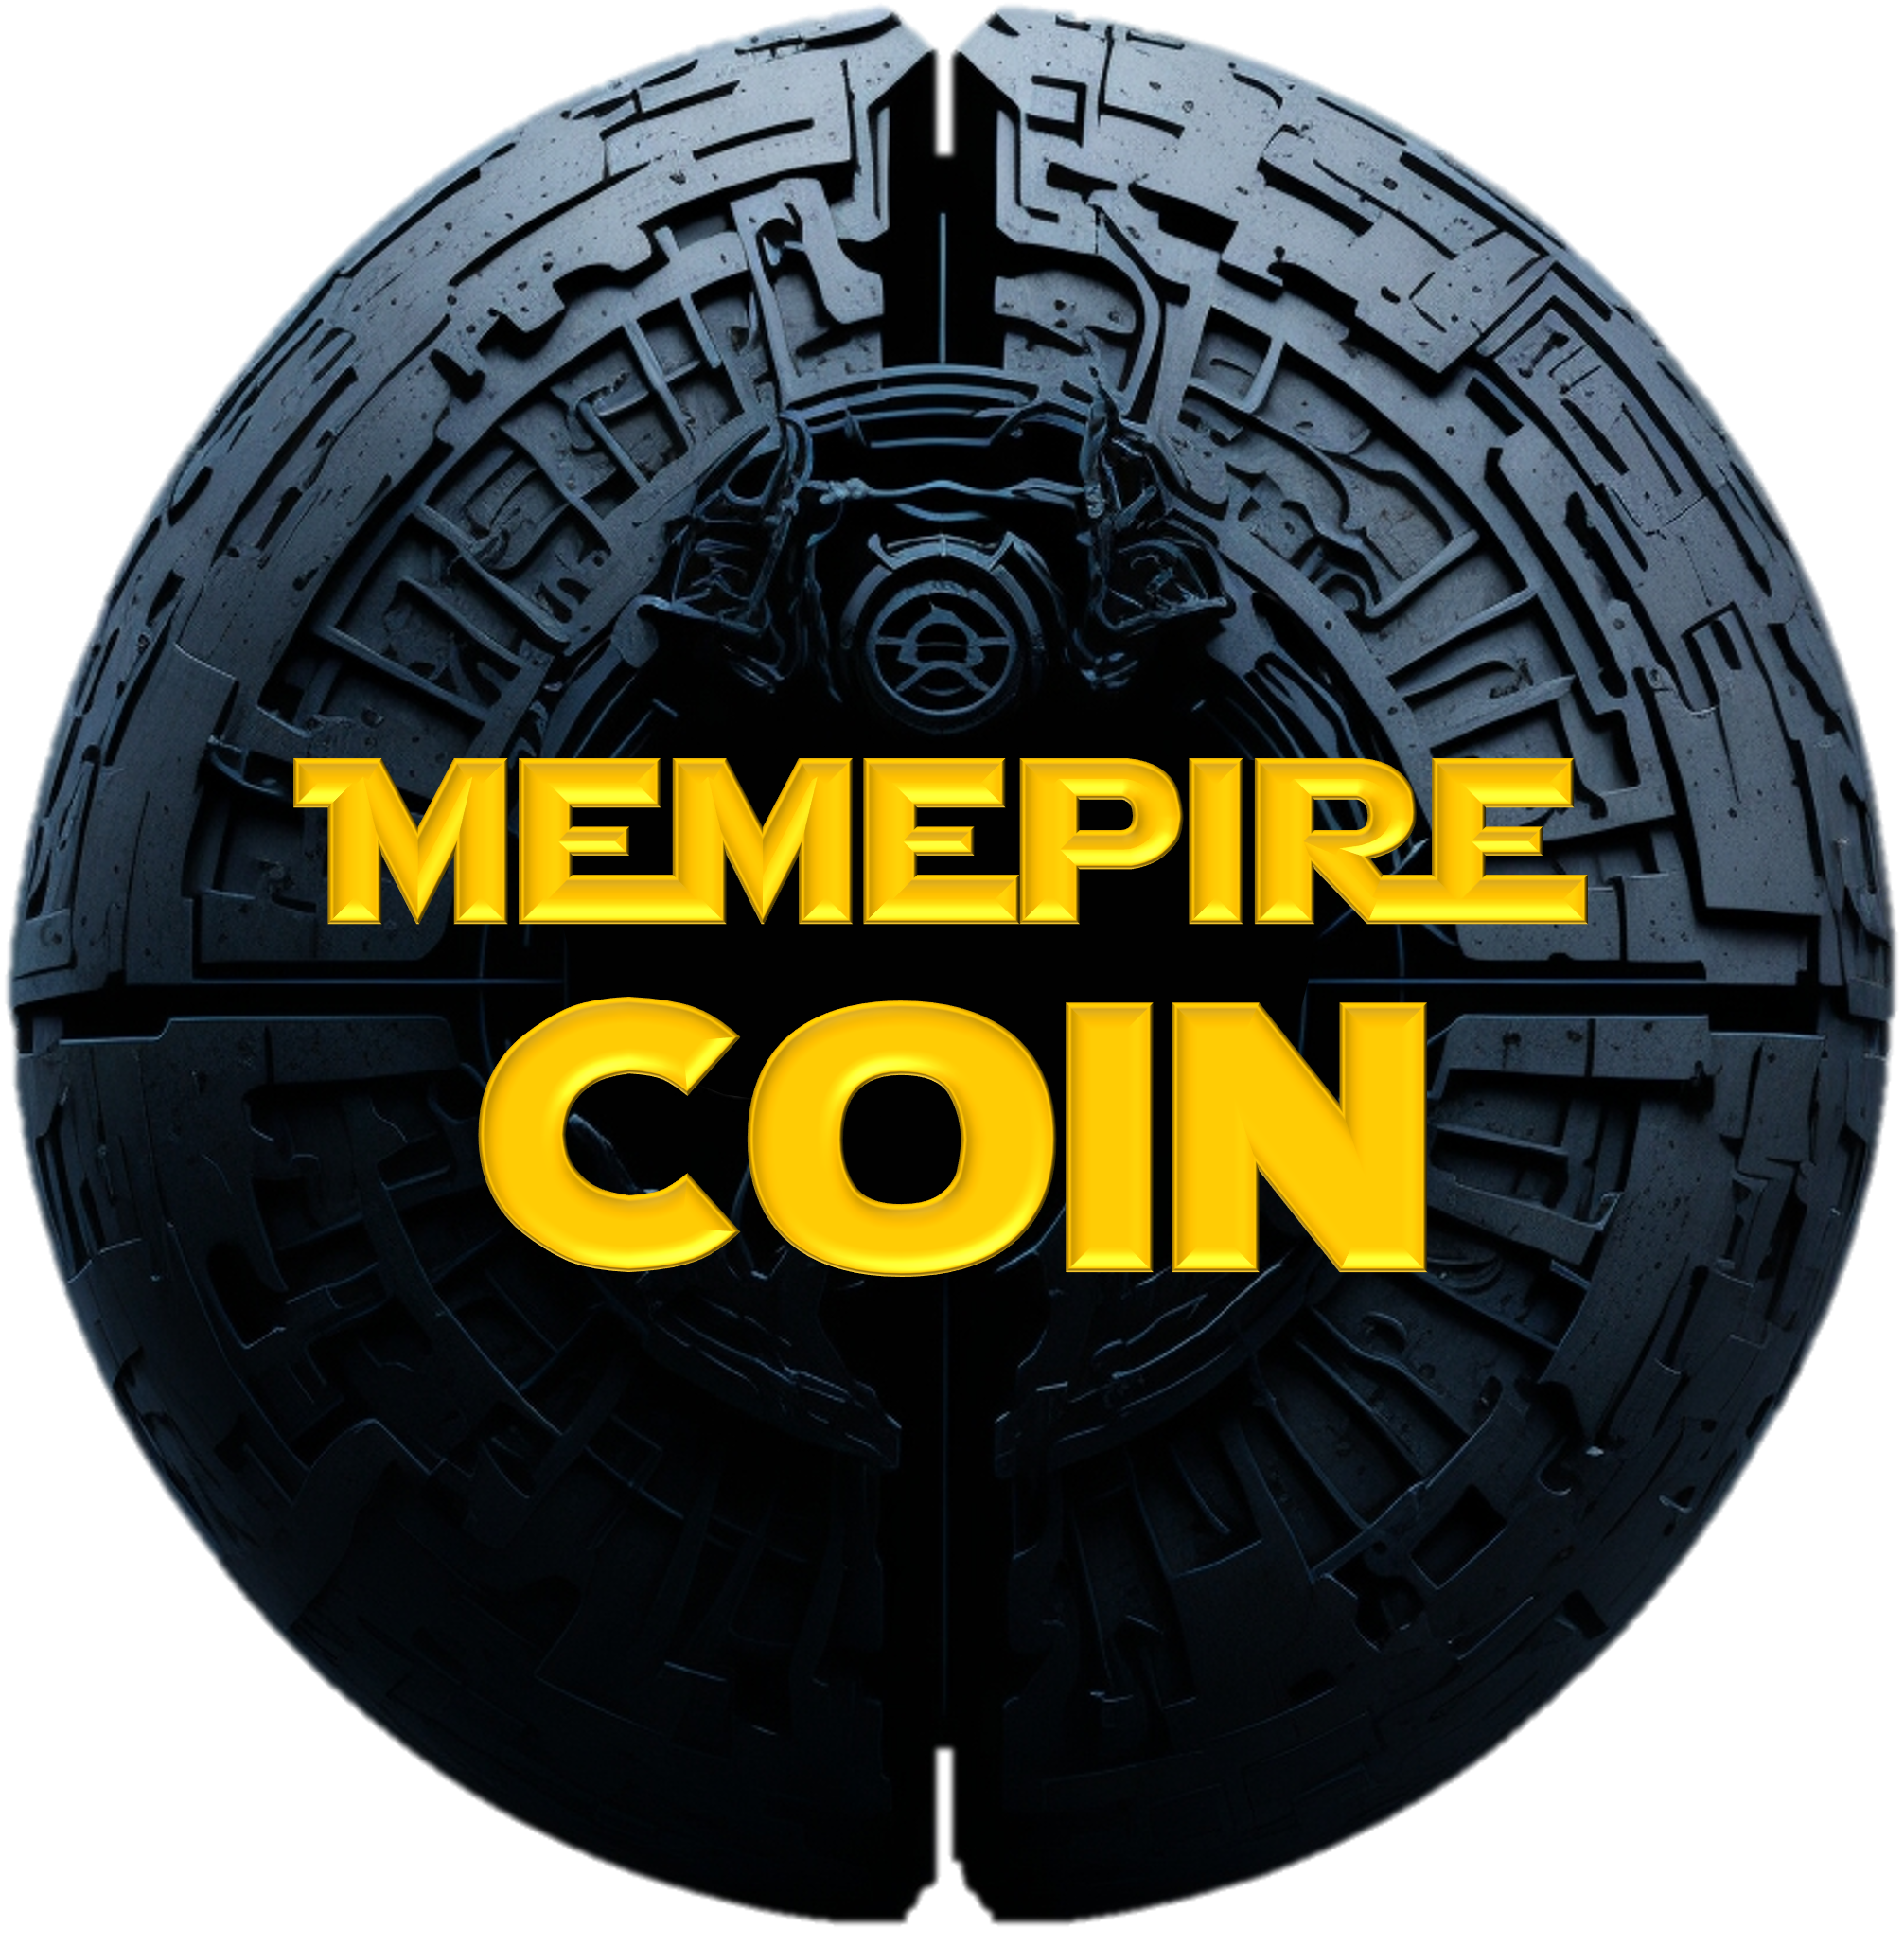 MEMEPIRE coin hero meme image